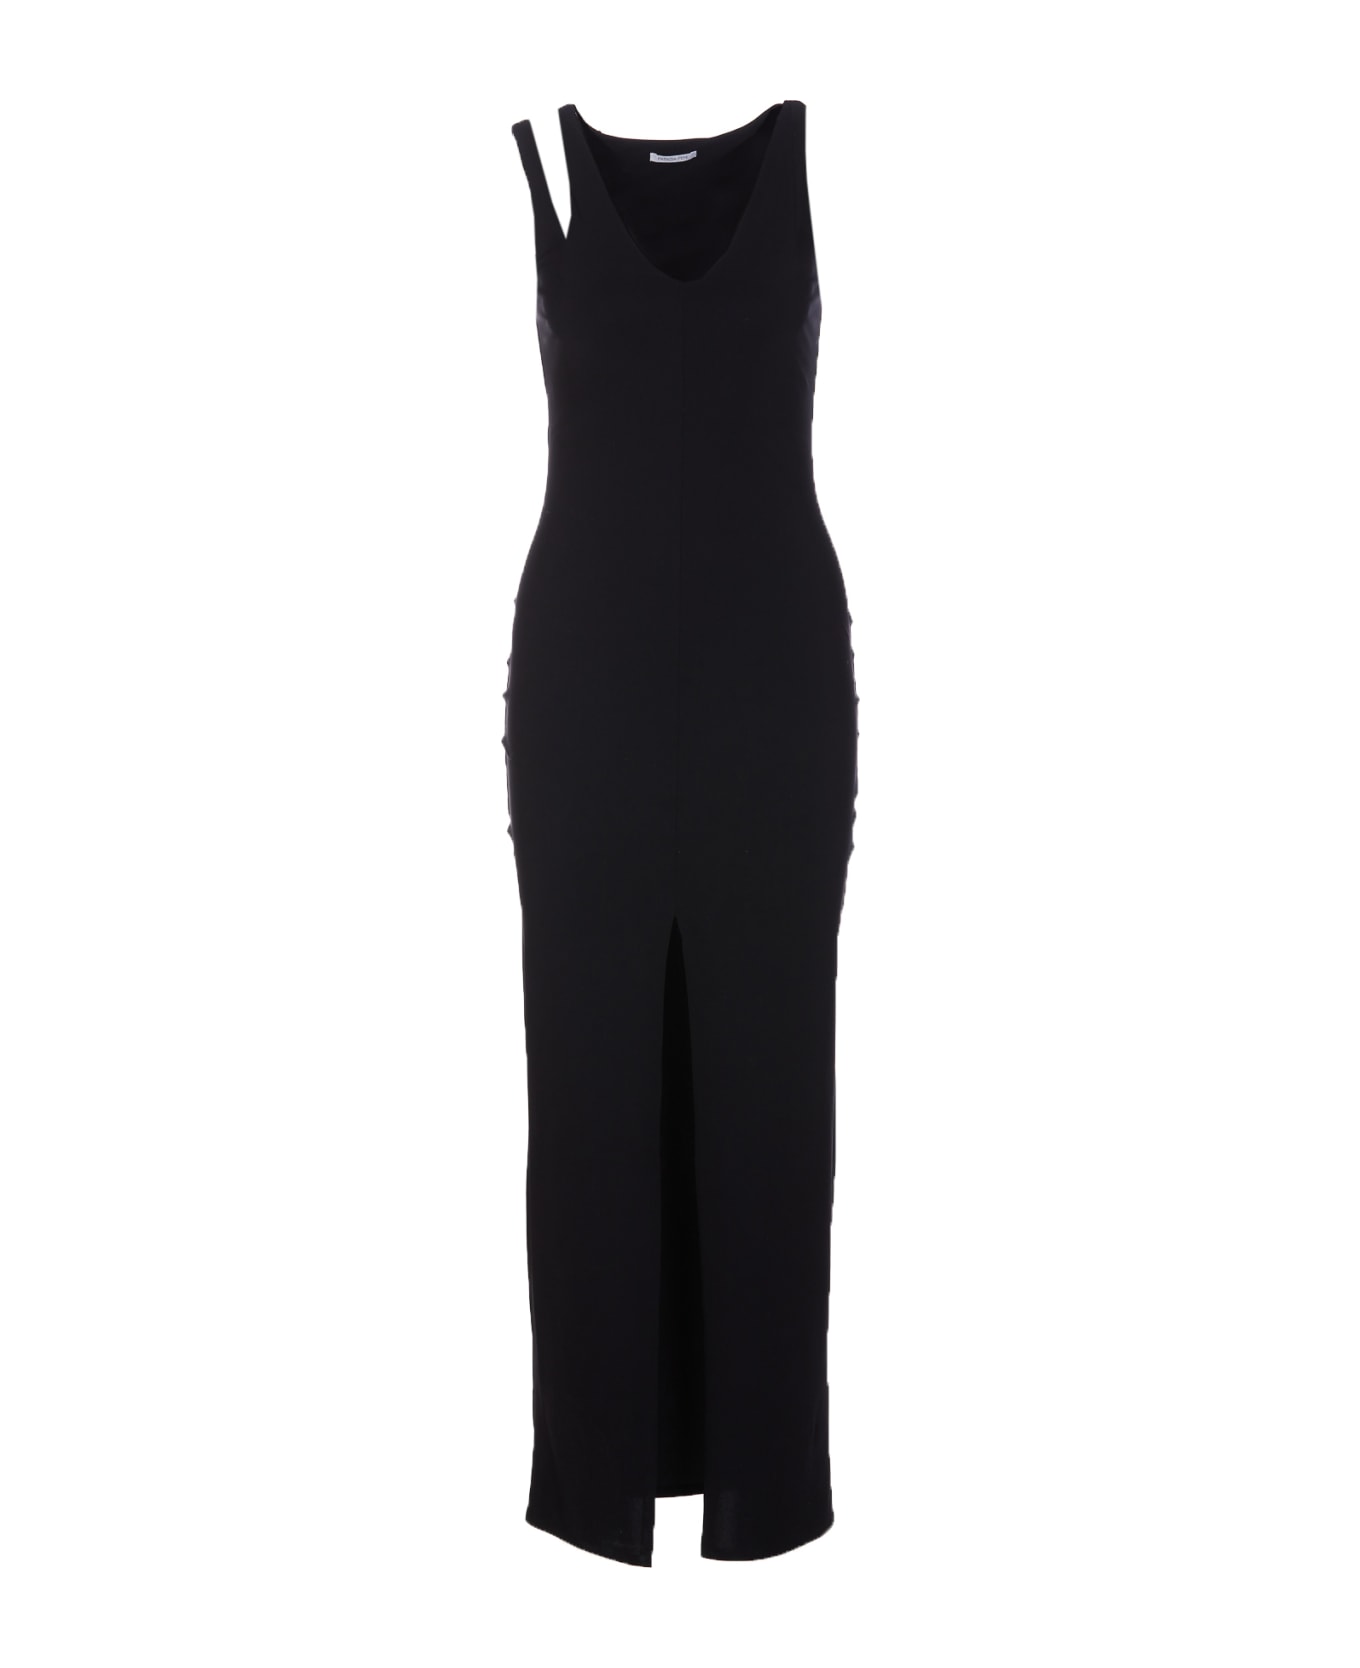 Patrizia Pepe Dress - Black ジャンプスーツ